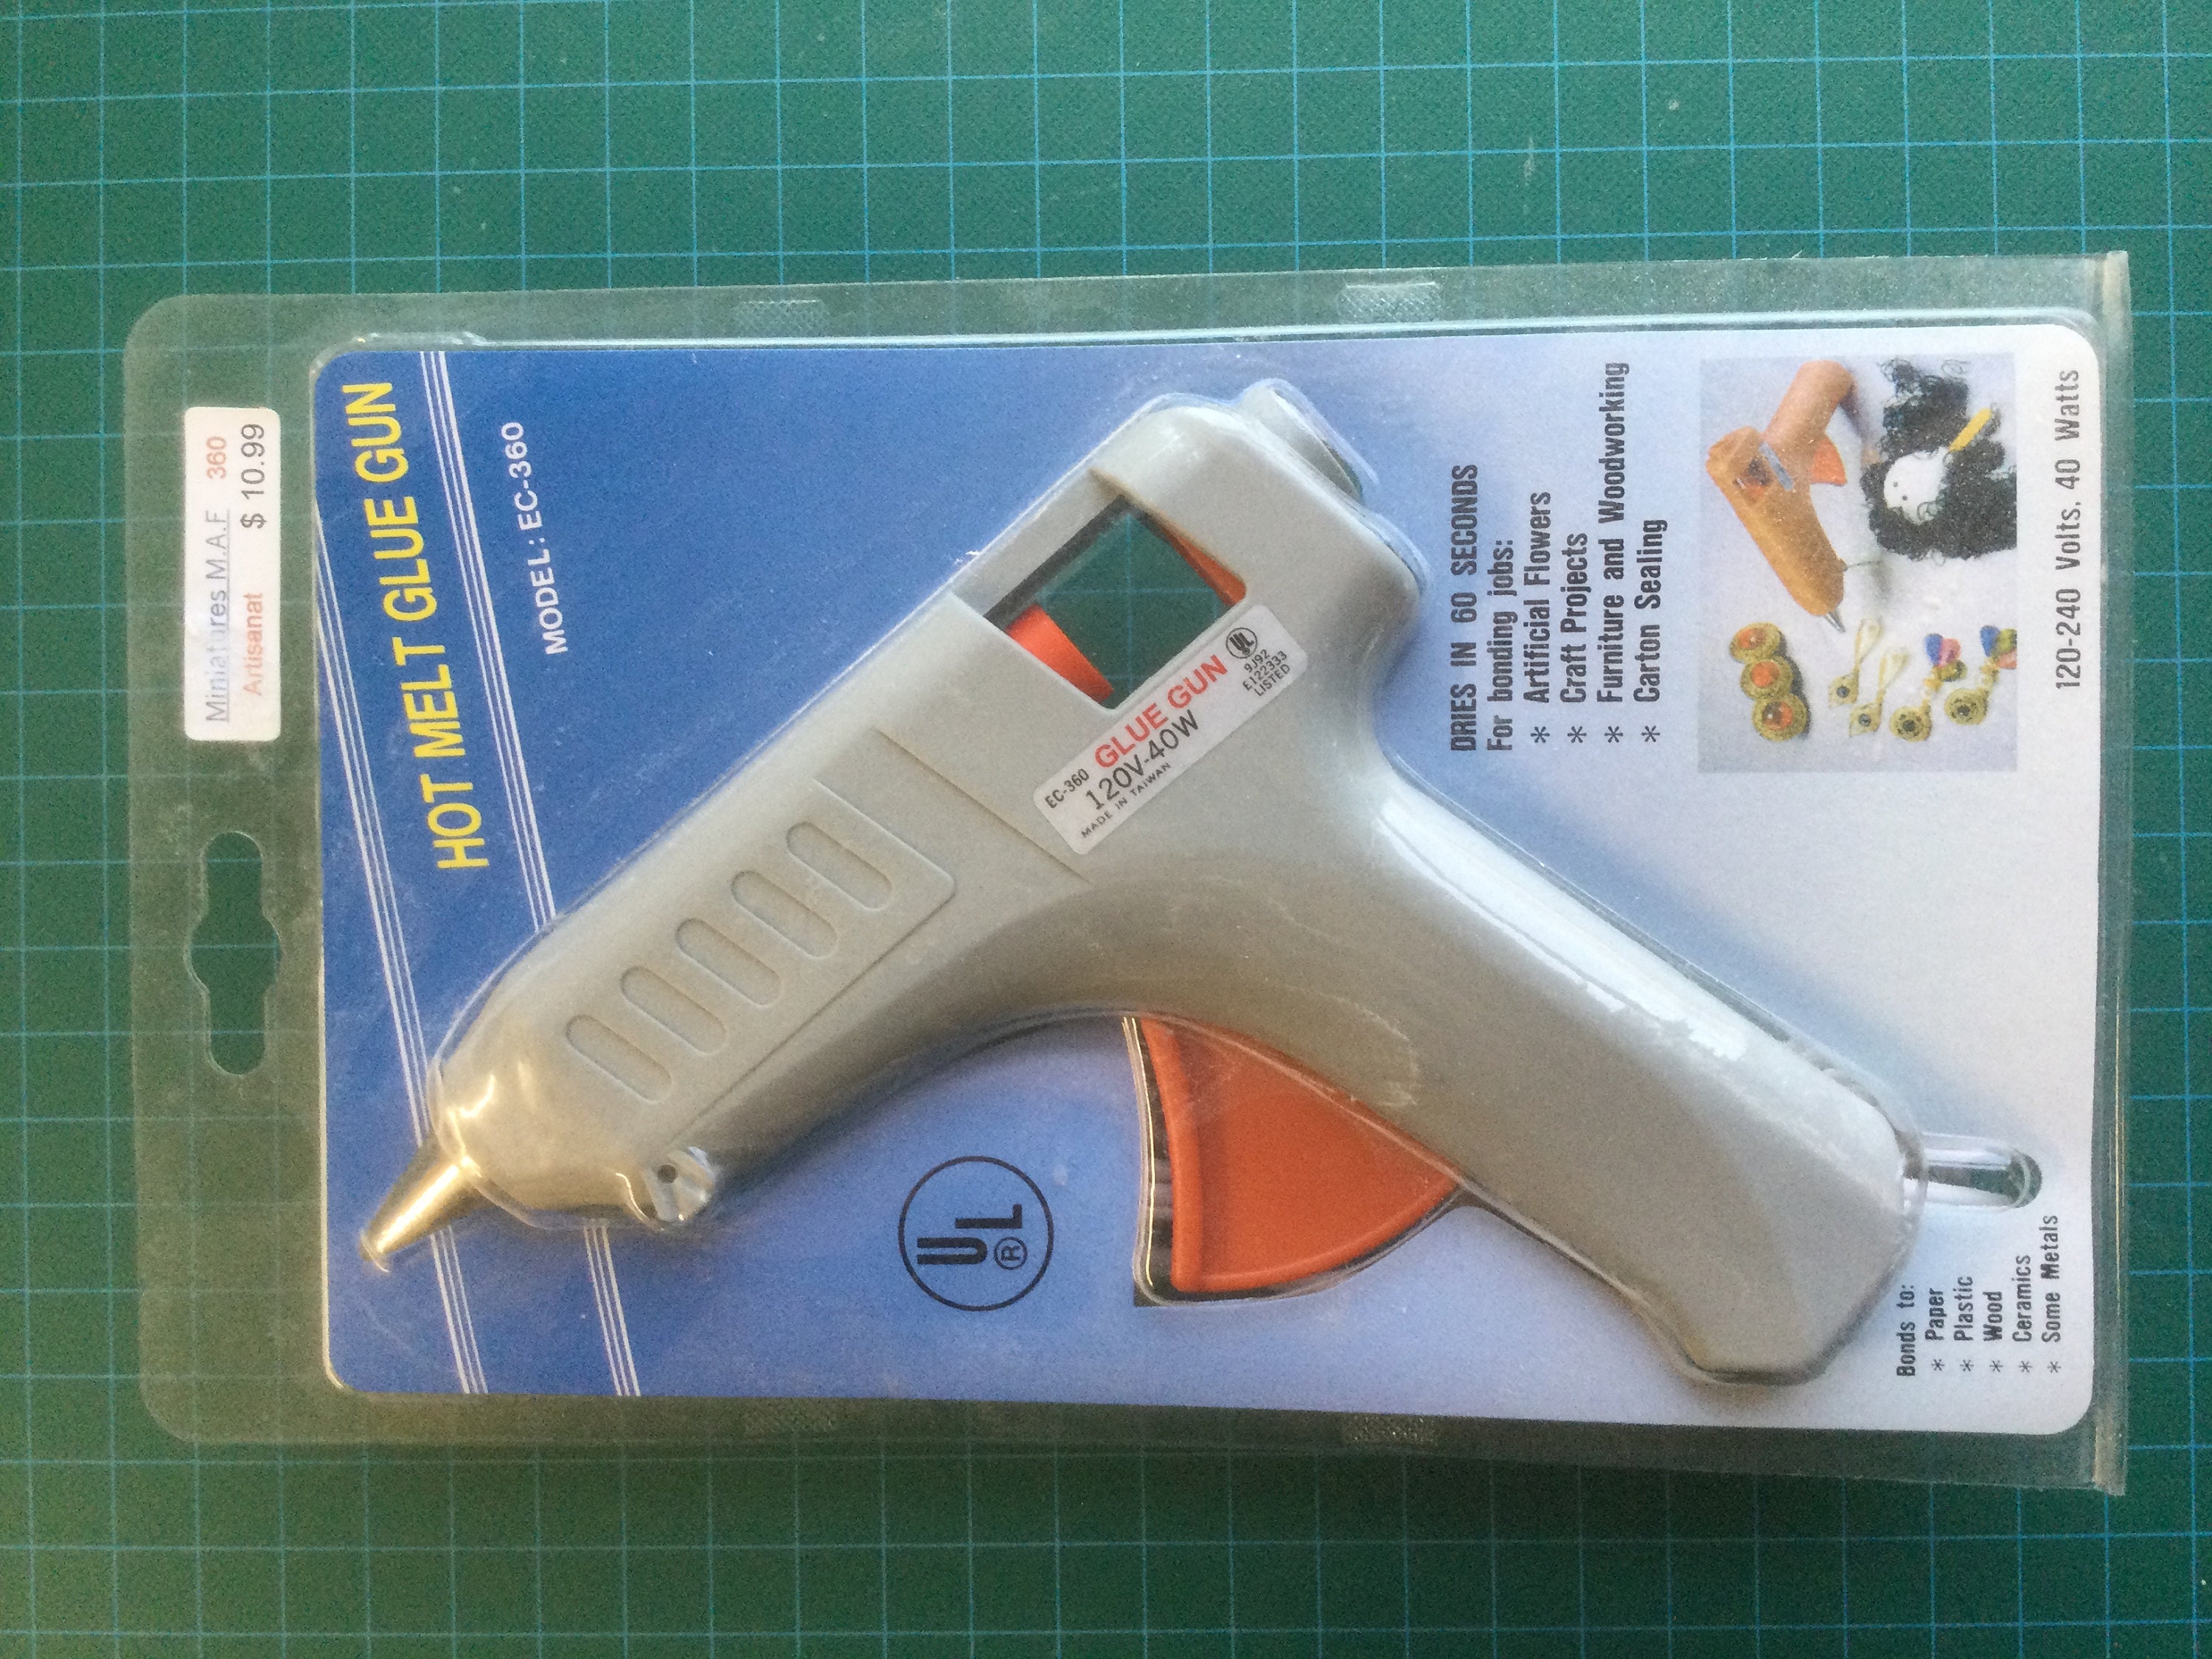 Large Hot Melt Glue Gun (EC-360)